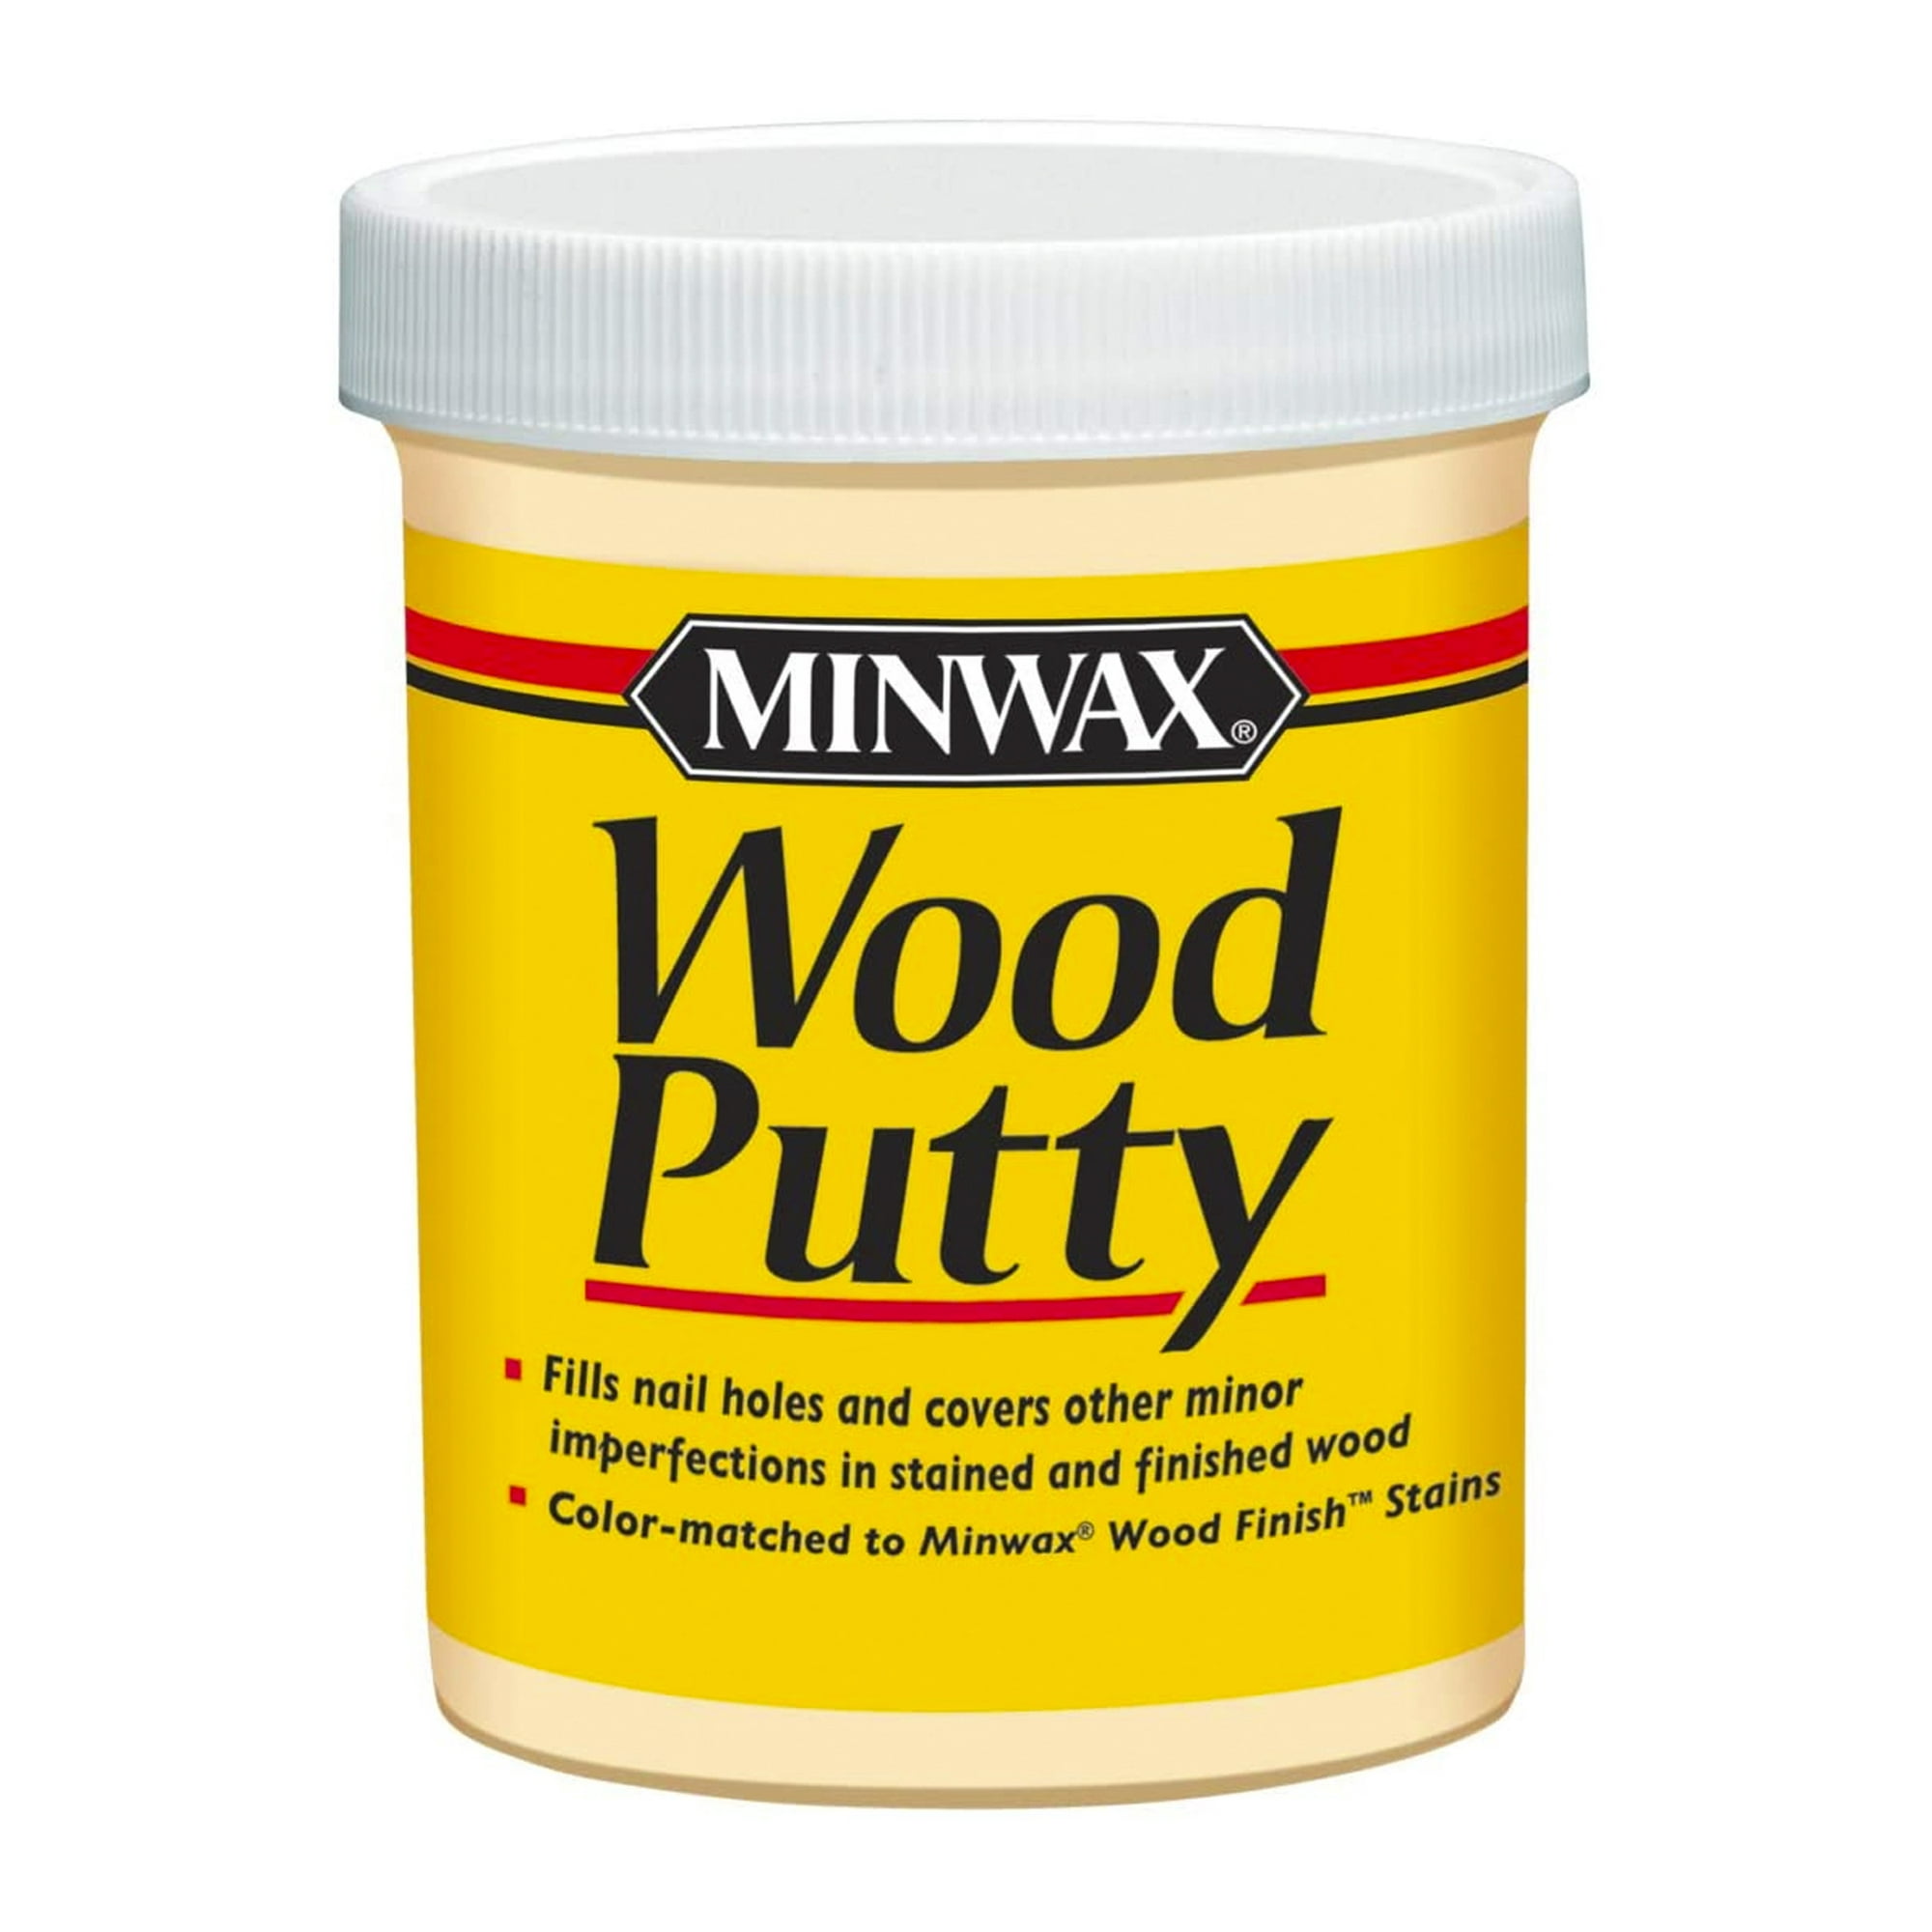 Minwax - Masilla de madera